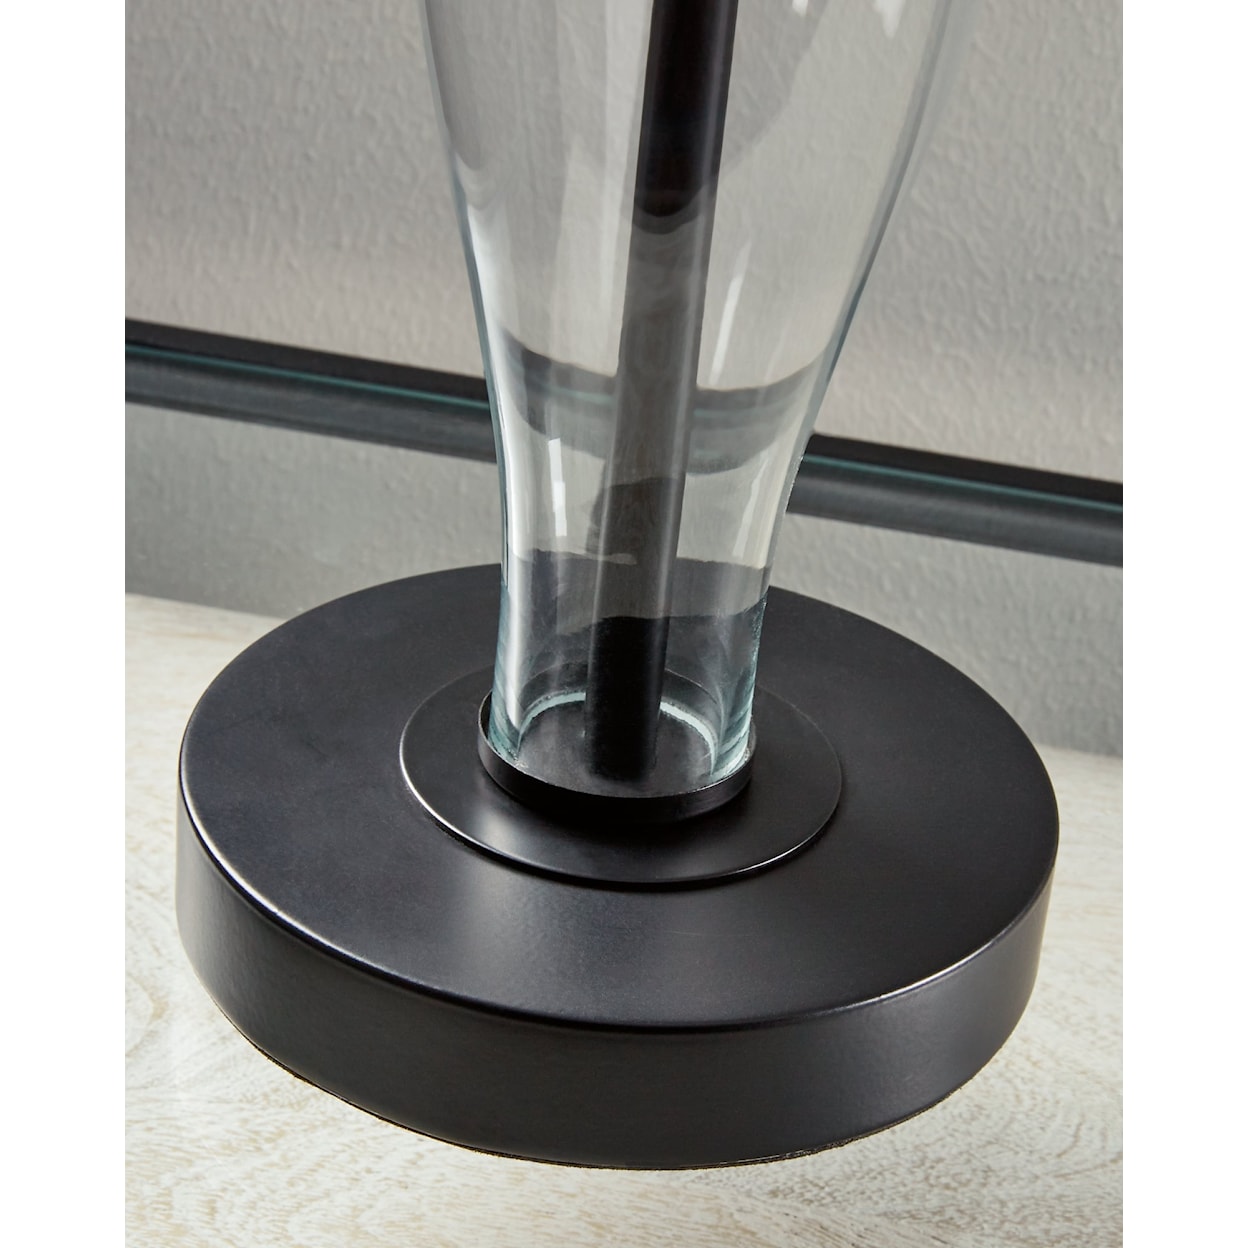 Benchcraft Travisburg Glass Table Lamp (Set of 2)